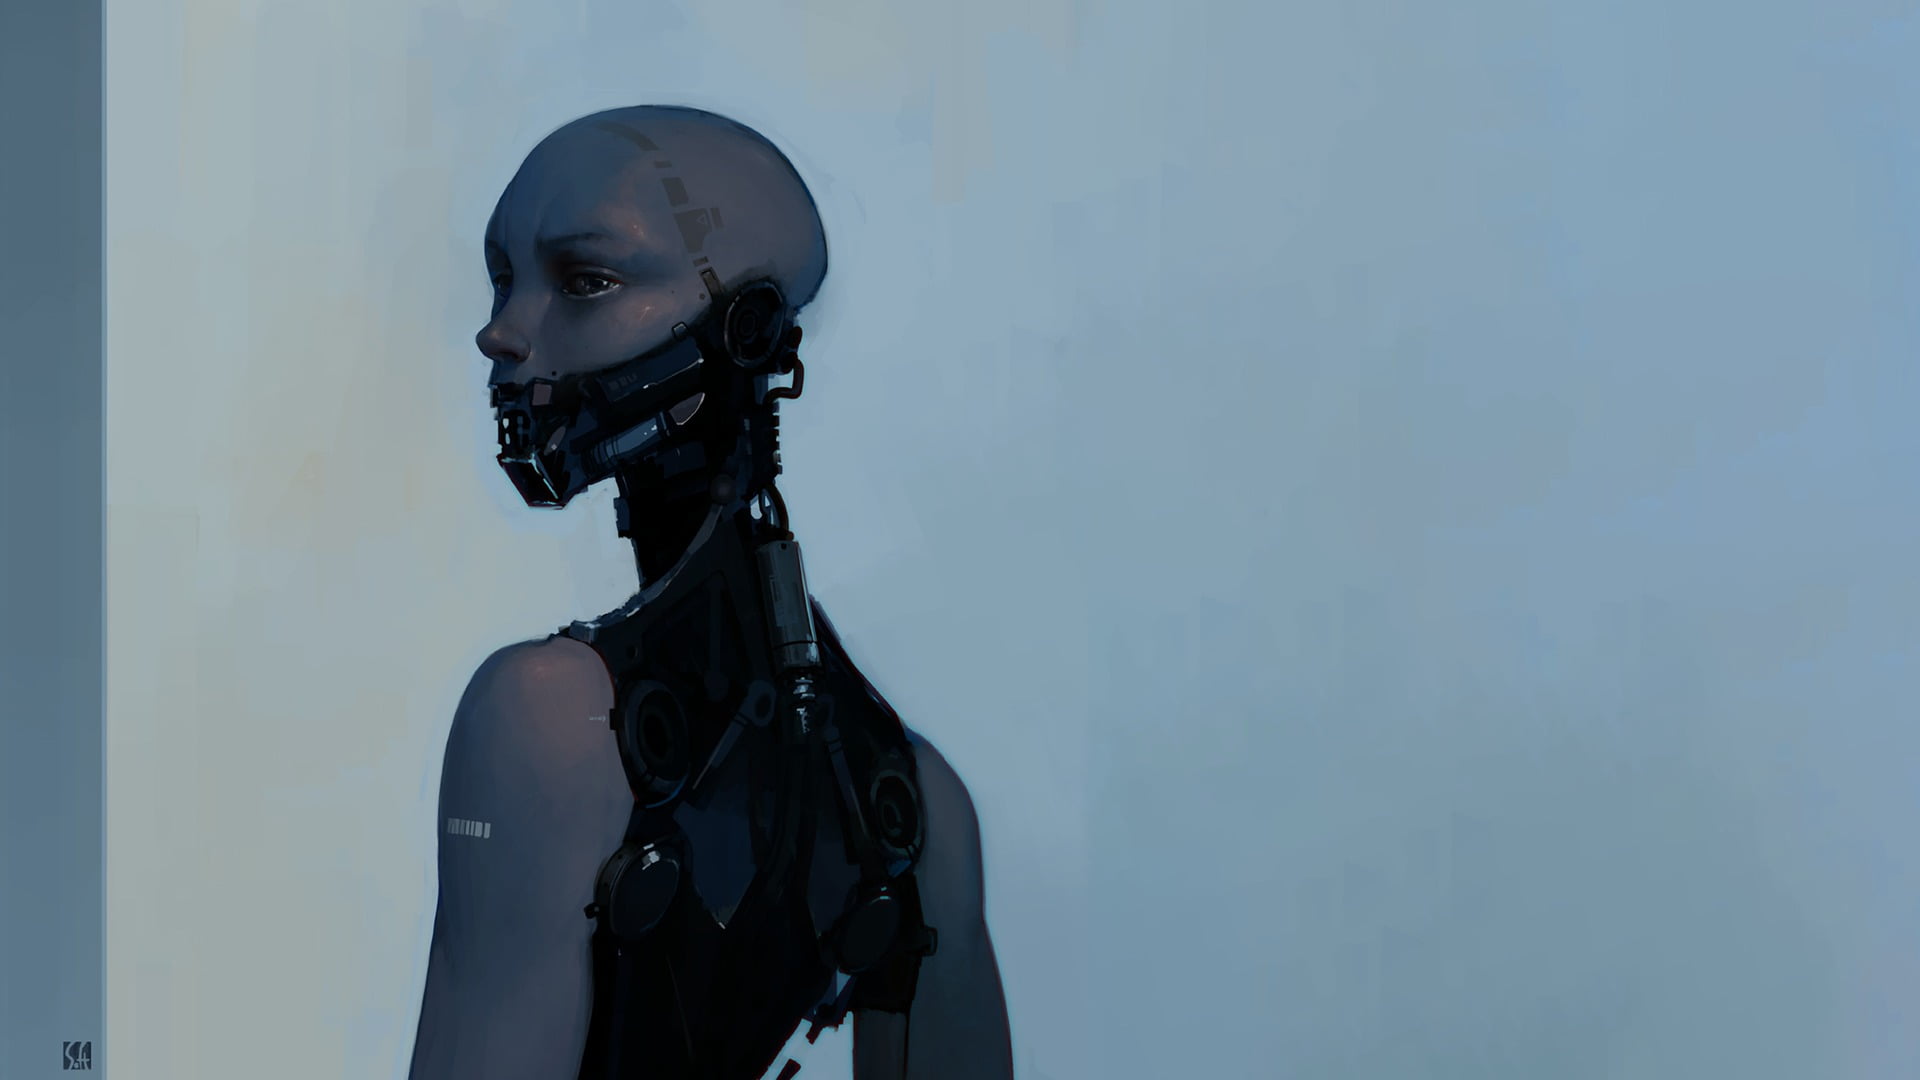 robot character wallpaper, science fiction, one person, portrait